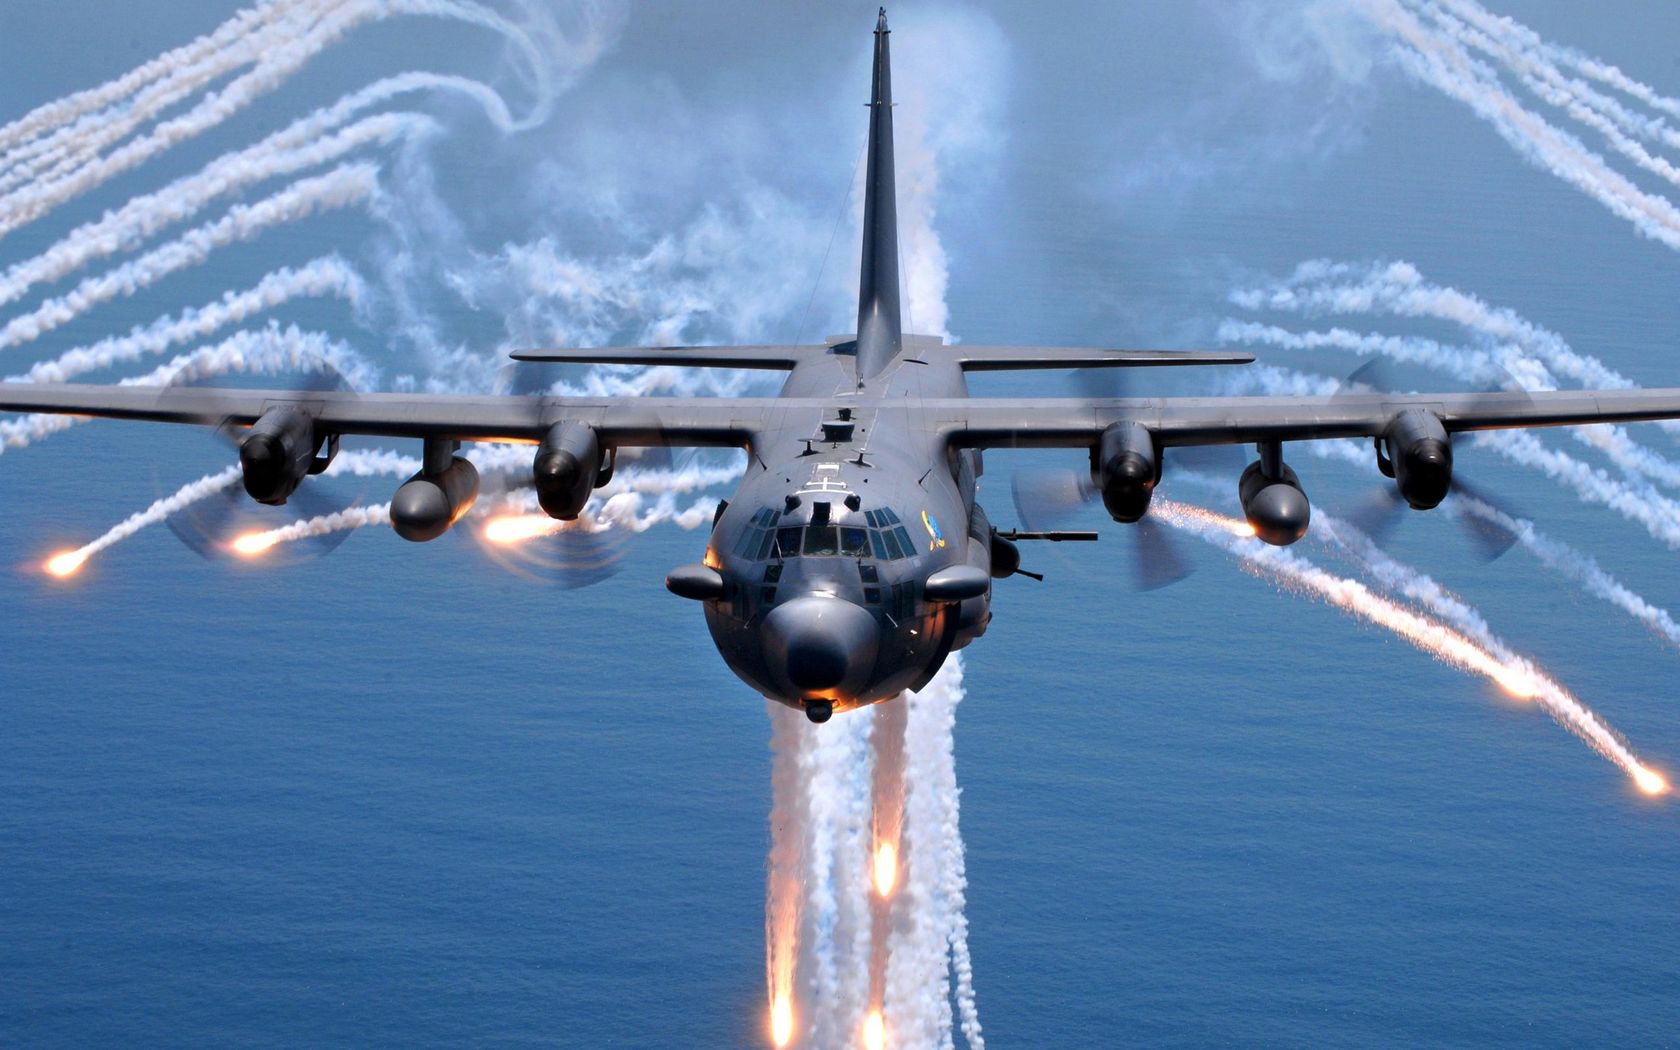 AC-130 Hercules 1680x1050. Tapeta, pozad na plochu PC. Obrzek ke staen zdarma